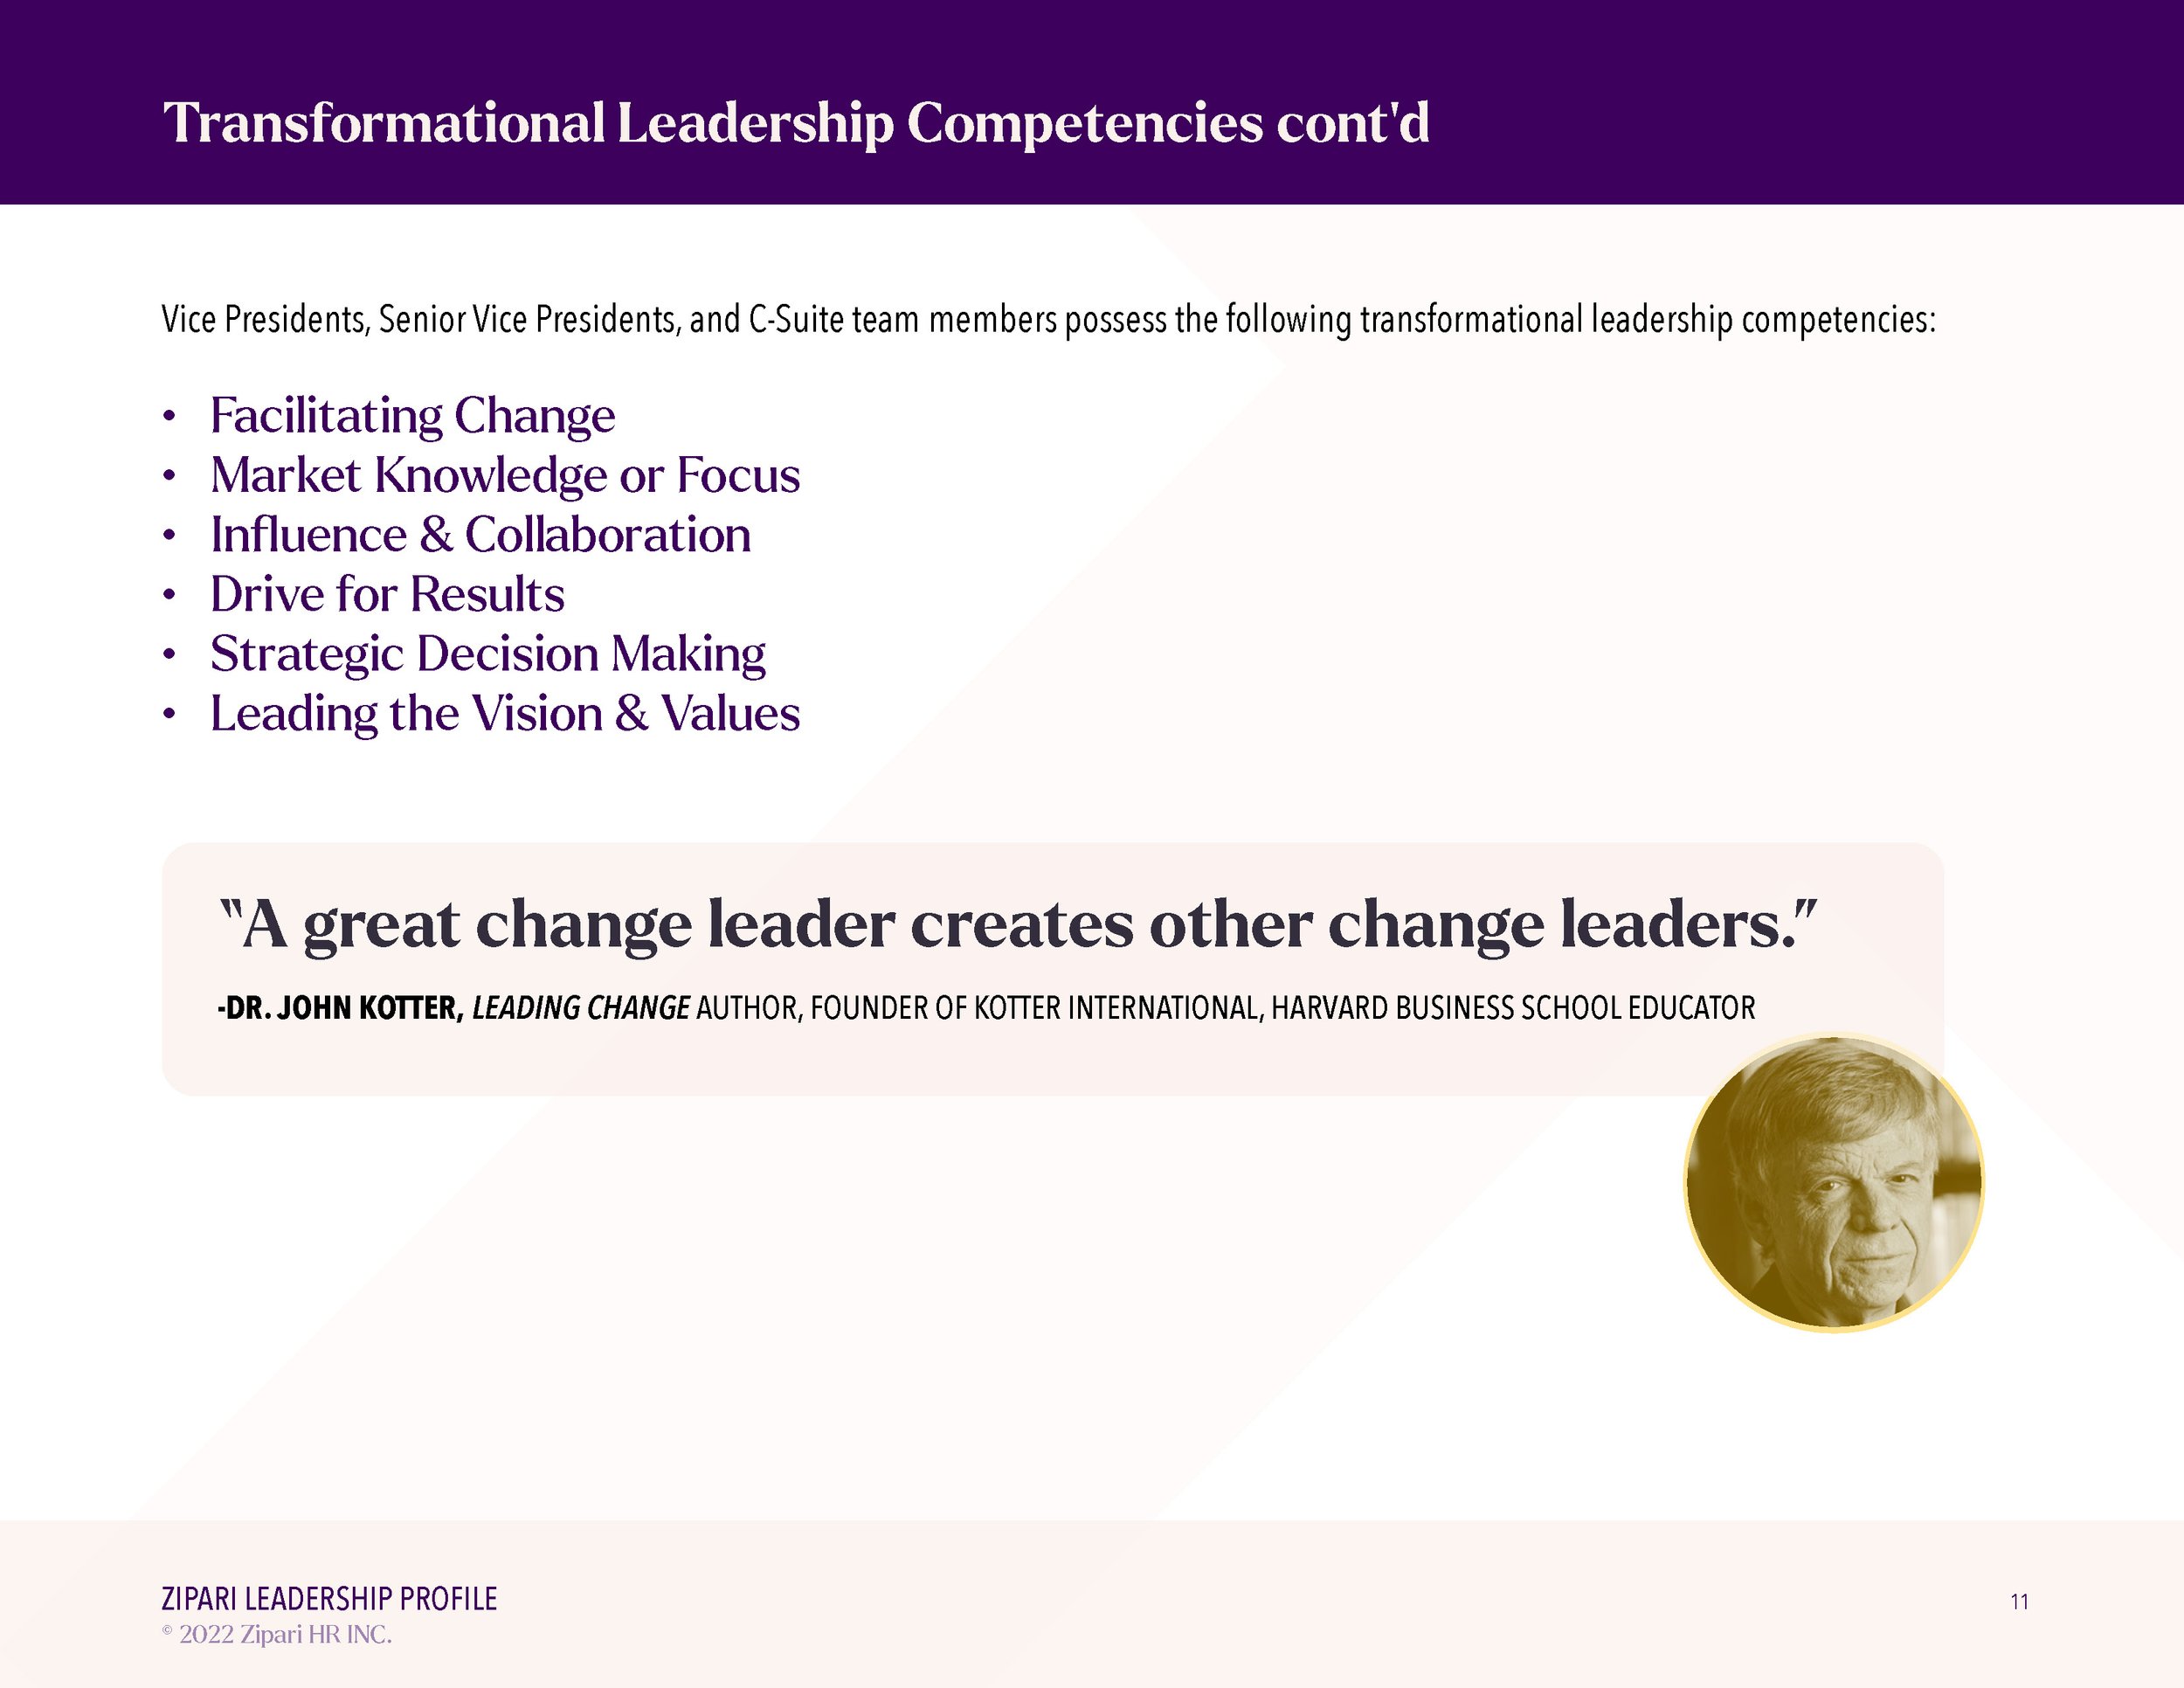 Zipari Leadership Profile_Page_11.jpg